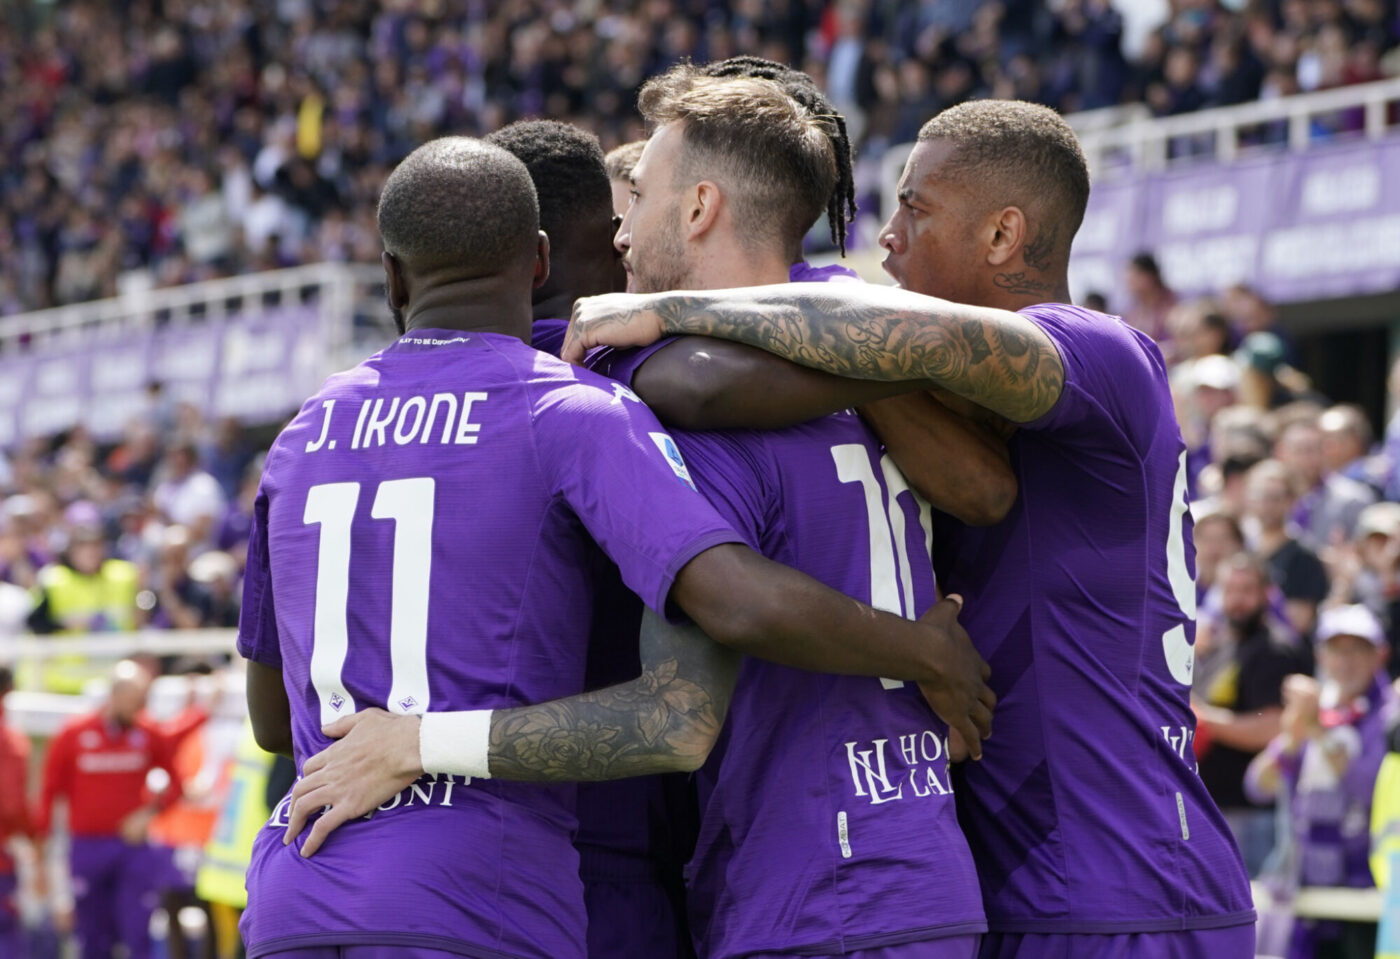 Pronostic Fiorentina Genoa : Analyse, cotes et prono du match de Serie A